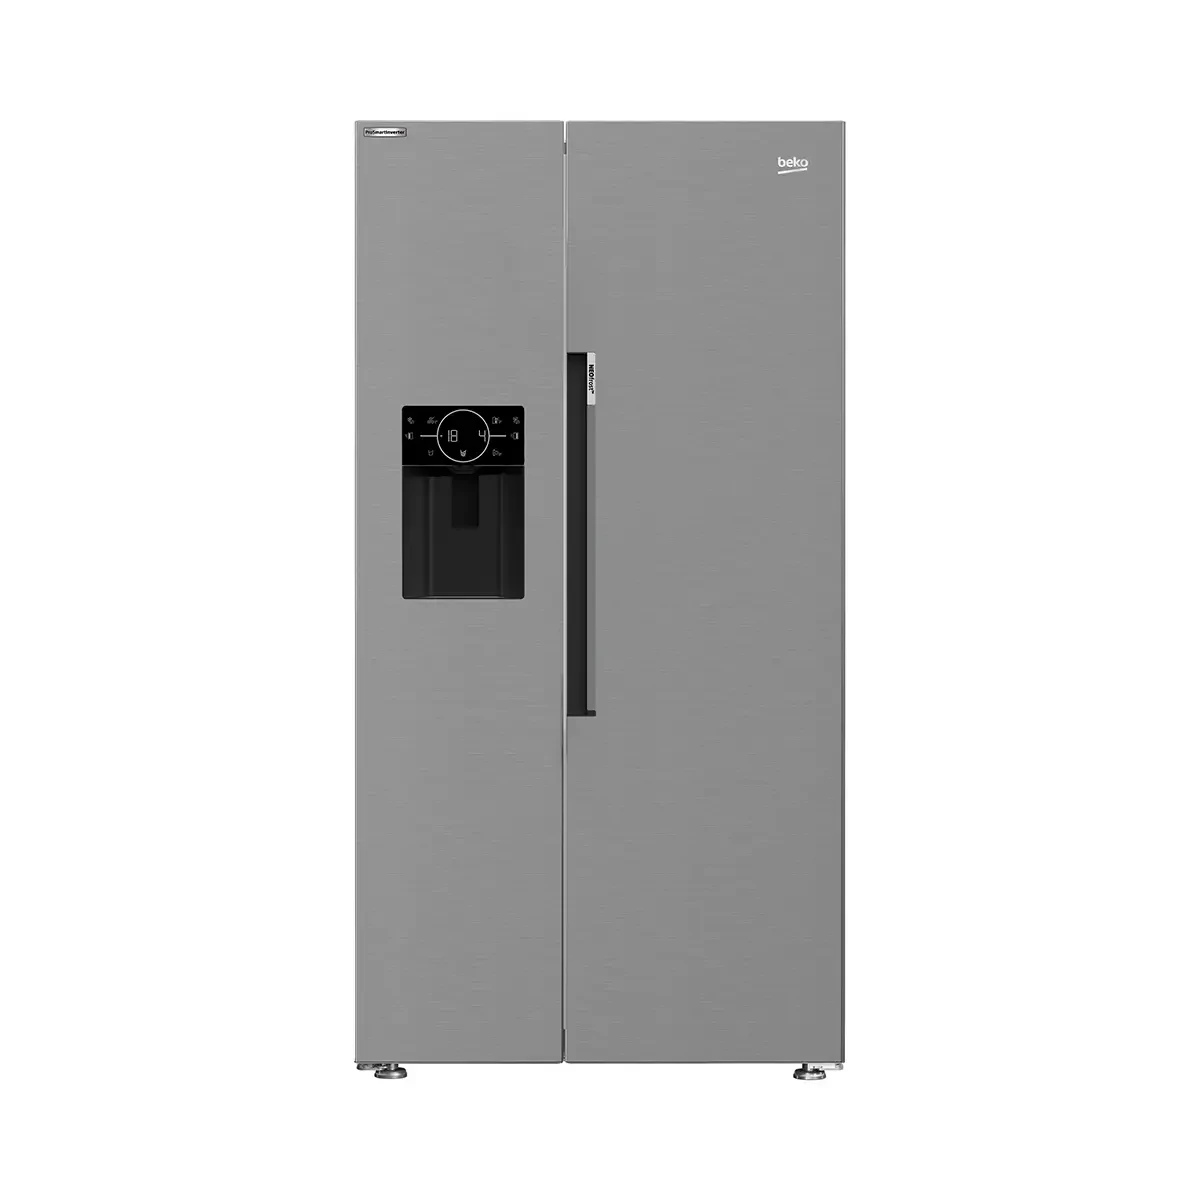 Beko 2 Door Side by side - 651 lt -net 525 LT - Stainless- - Nofrost - Inverter  -  ice & water Dispenser